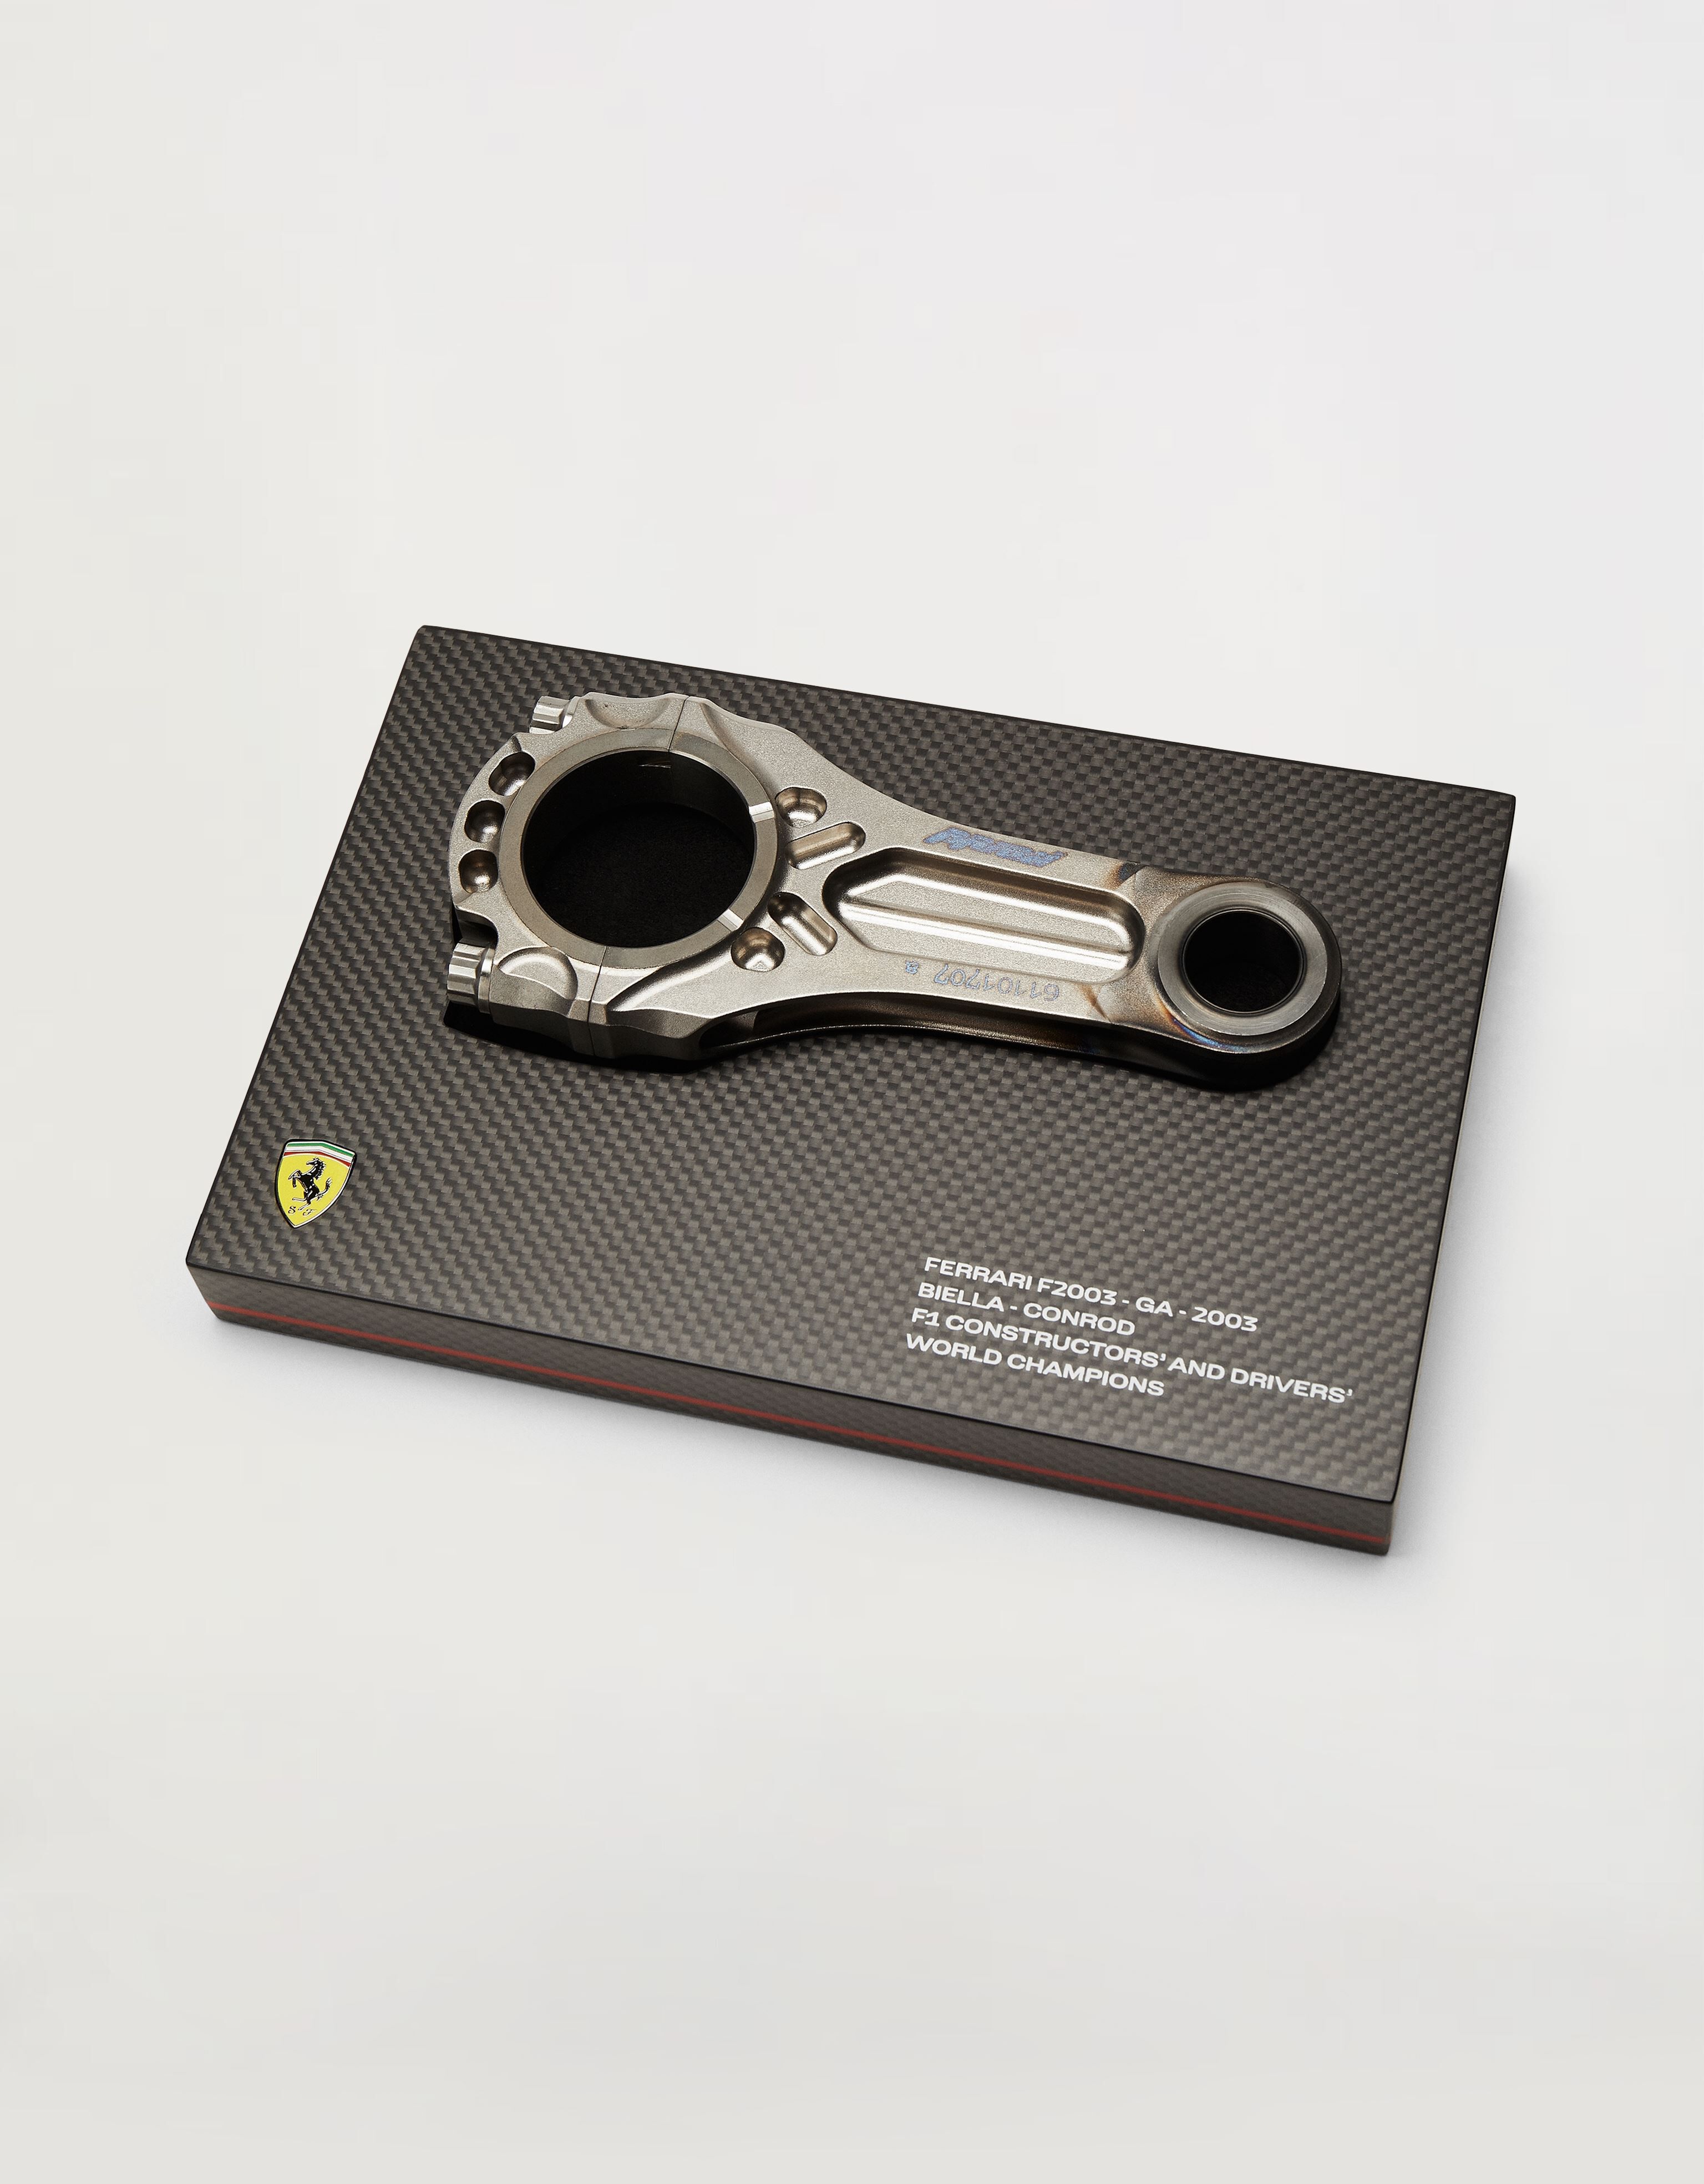 Ferrari Original piston from the F2003, winner of the 2003 Constructors' and Drivers' Championships Black 47408f